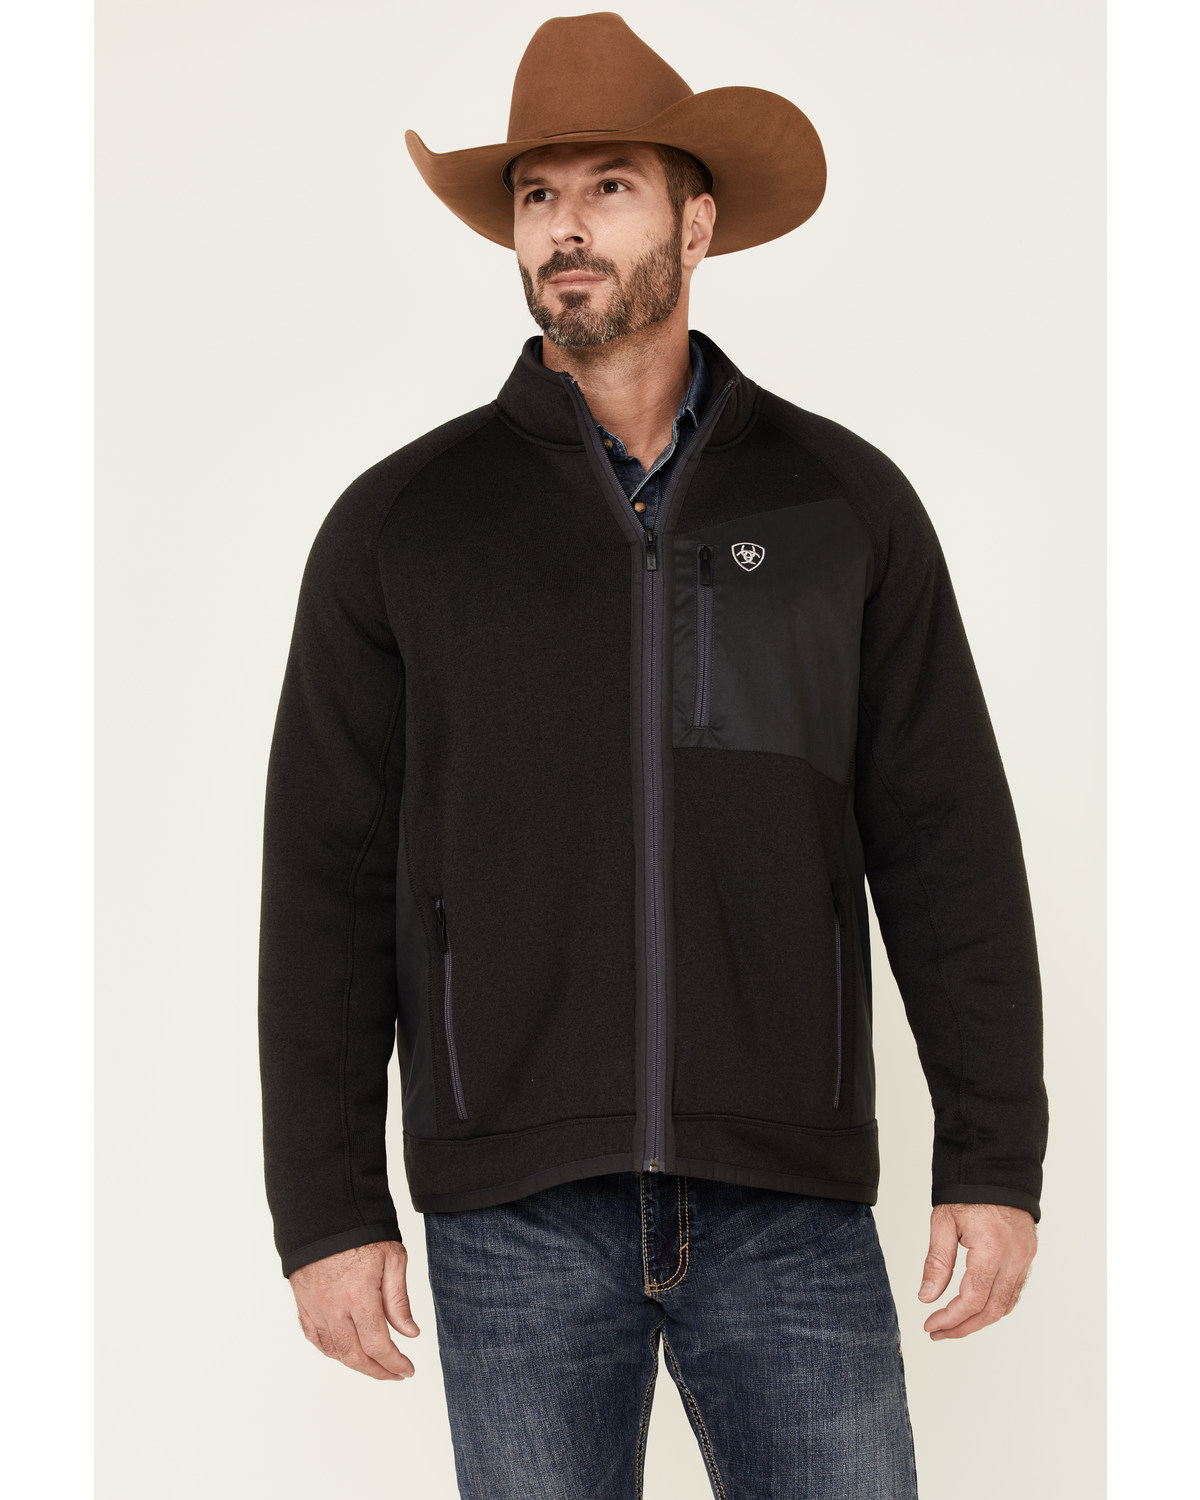 Ariat Men's Bluff Jersey Softshell Zip-Front Jacket